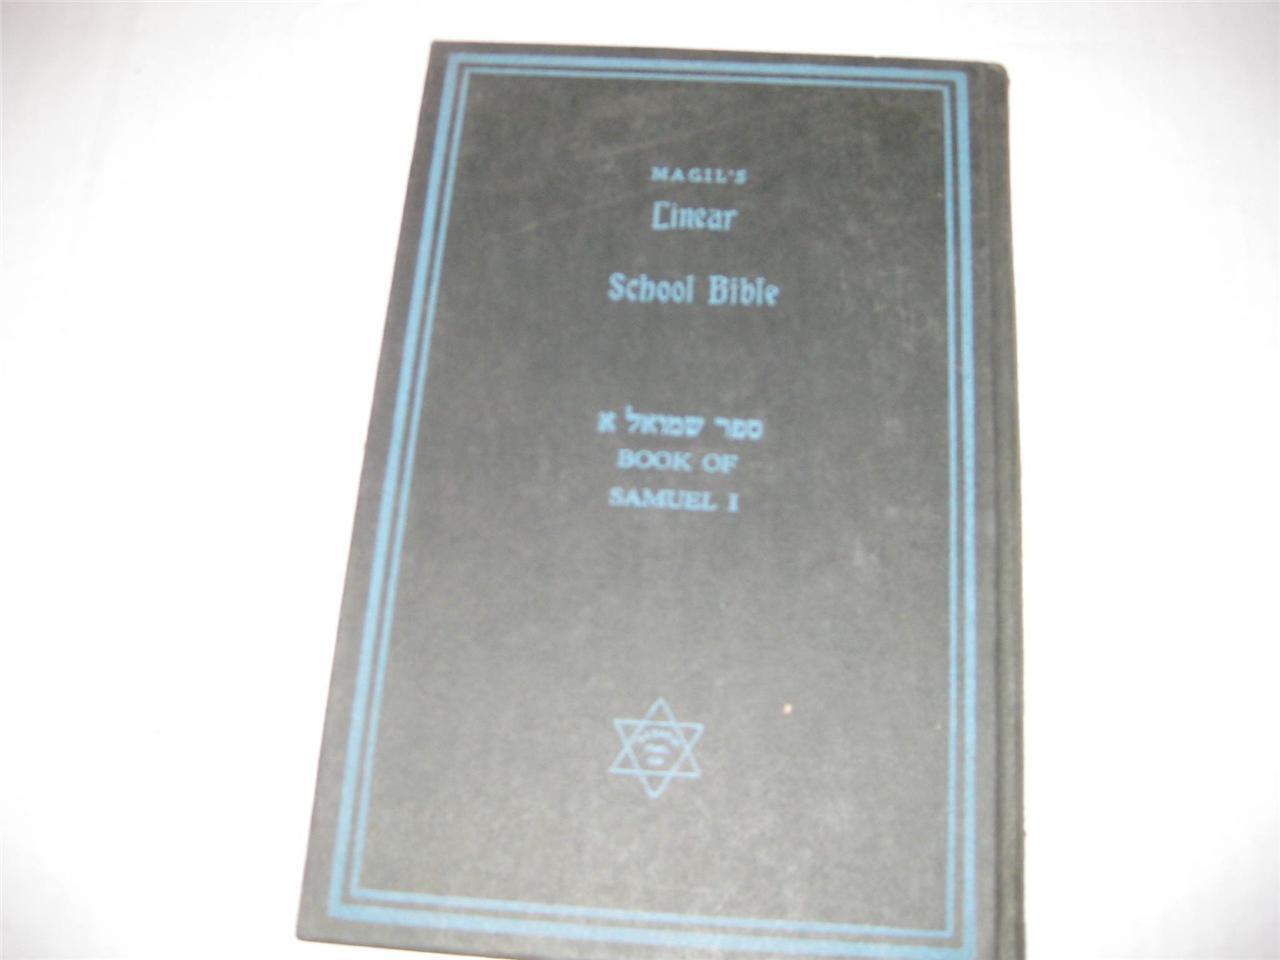 Magil's Linear Jewish SAMUEL I SHMUEL I Torah HEBREW ENGLISH